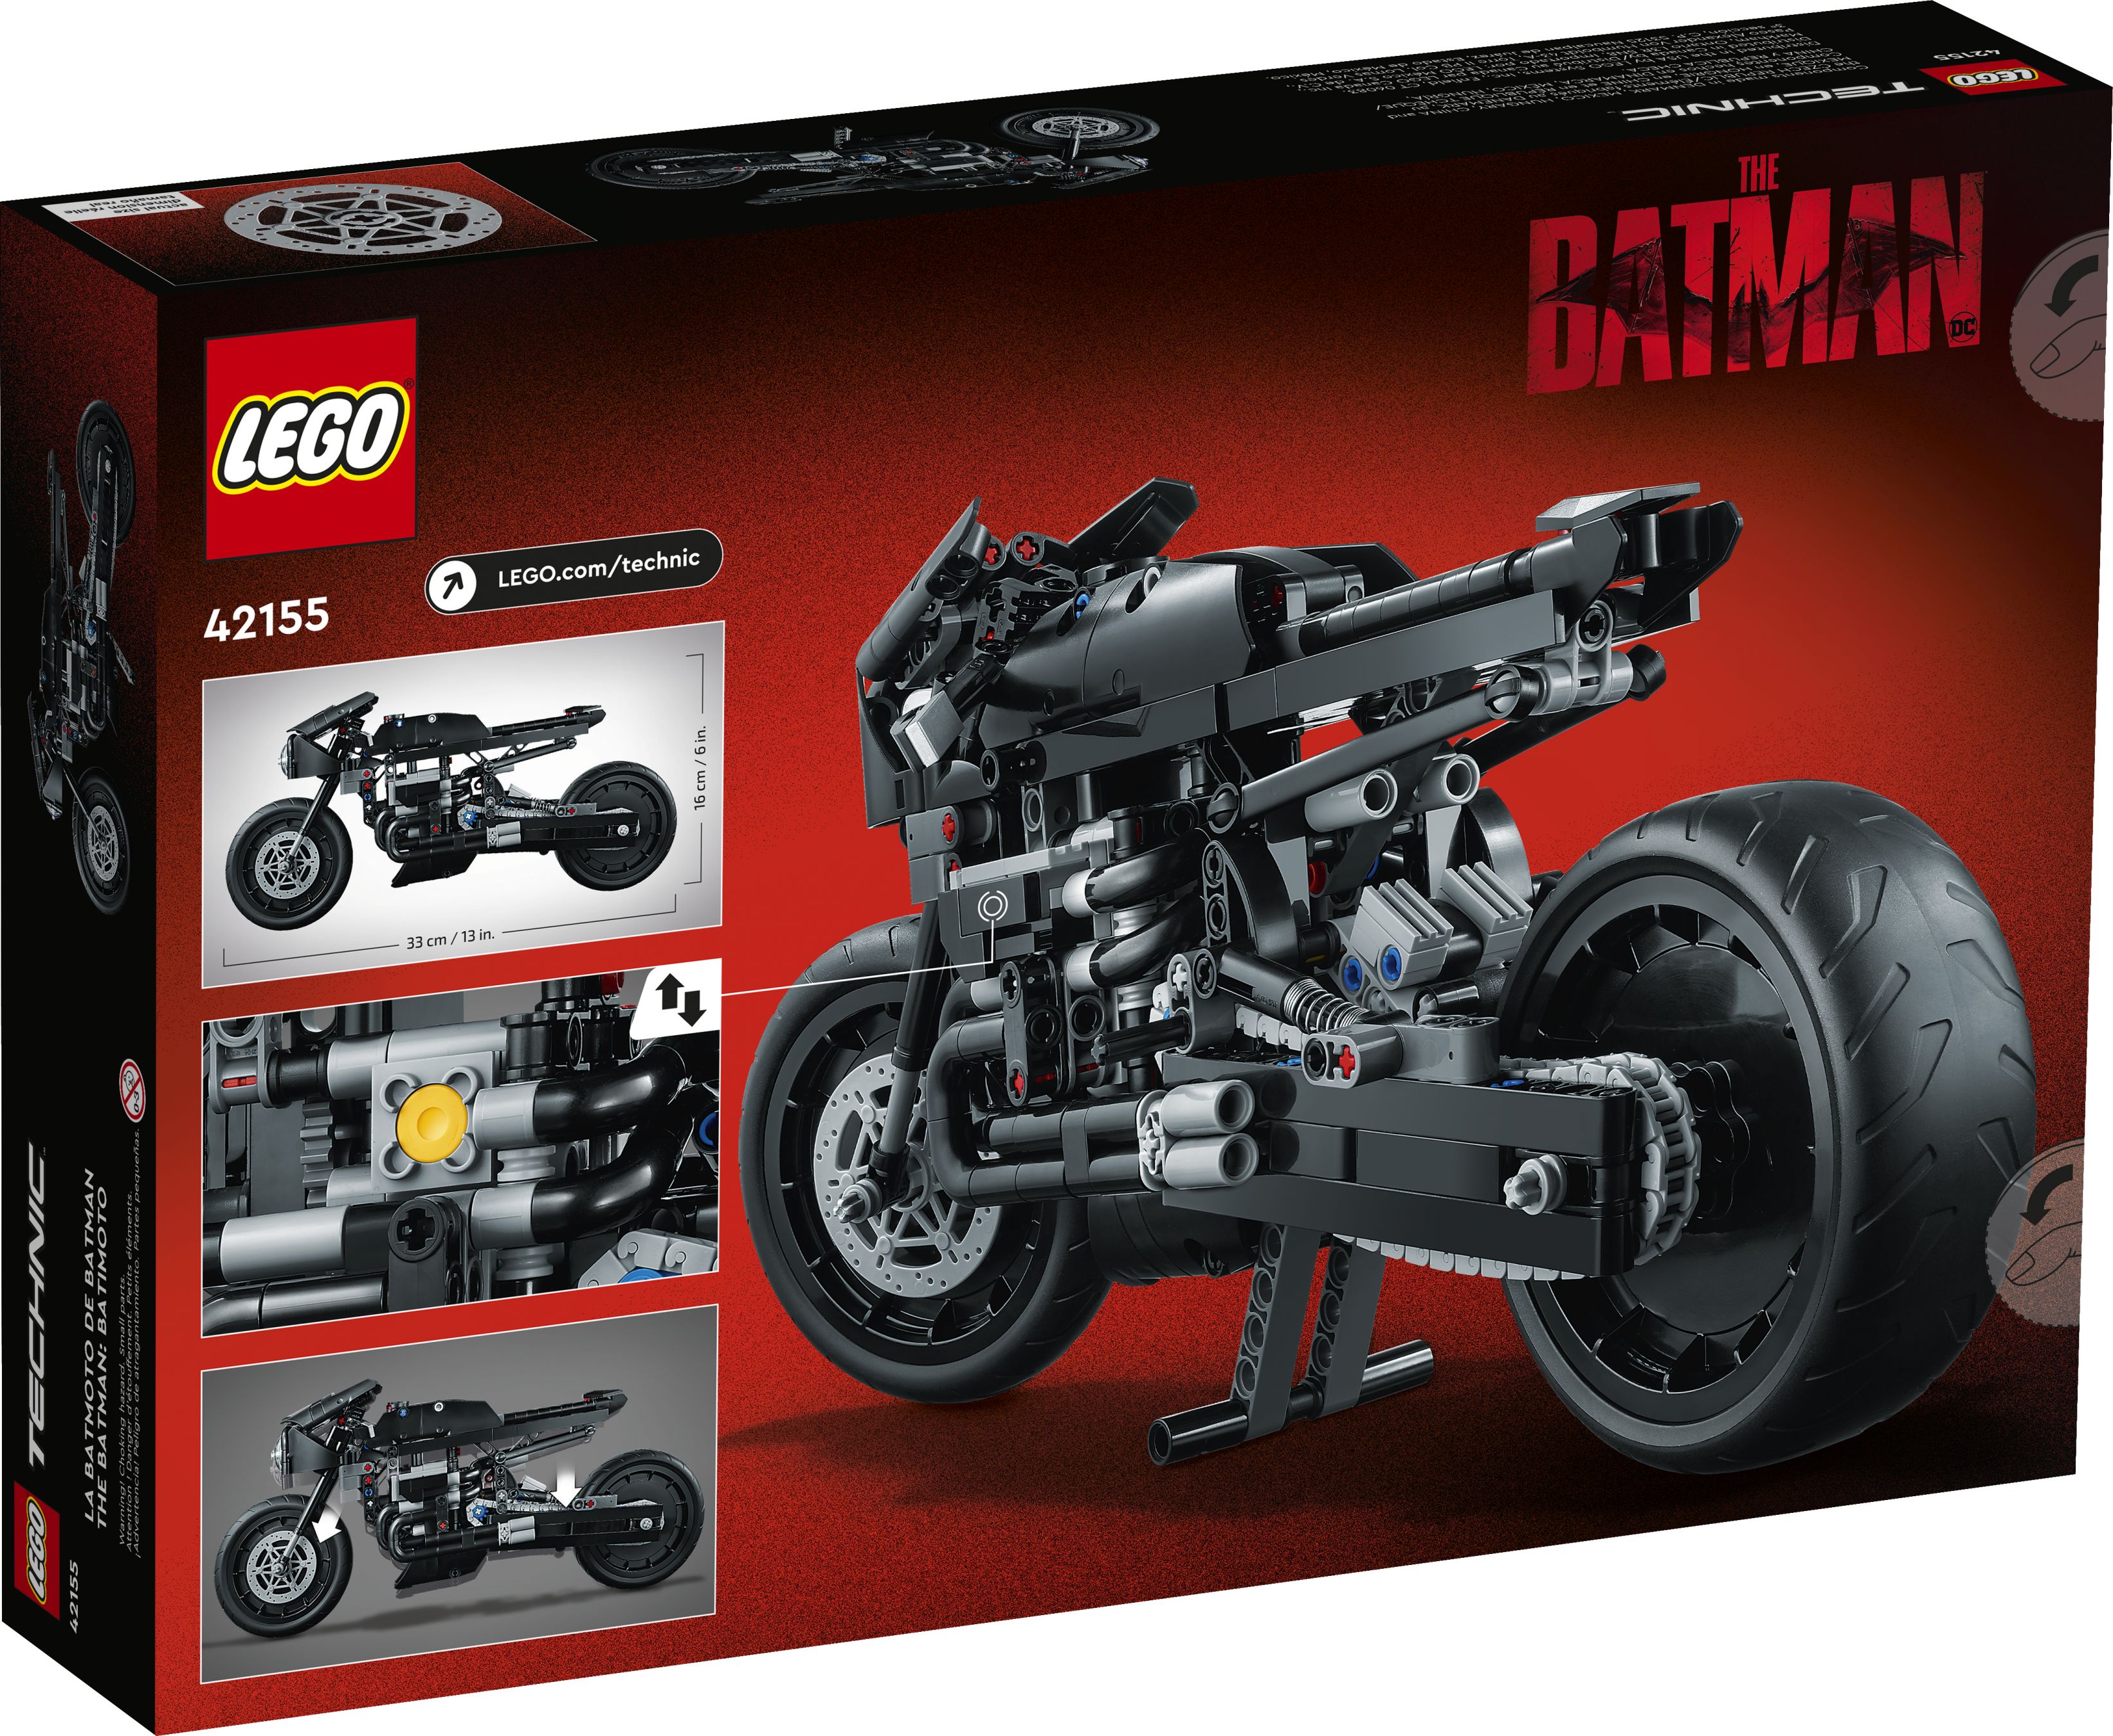 LEGO Technic 42155 THE BATMAN – BATCYCLE™ LEGO_42155_Box5_v39.jpg